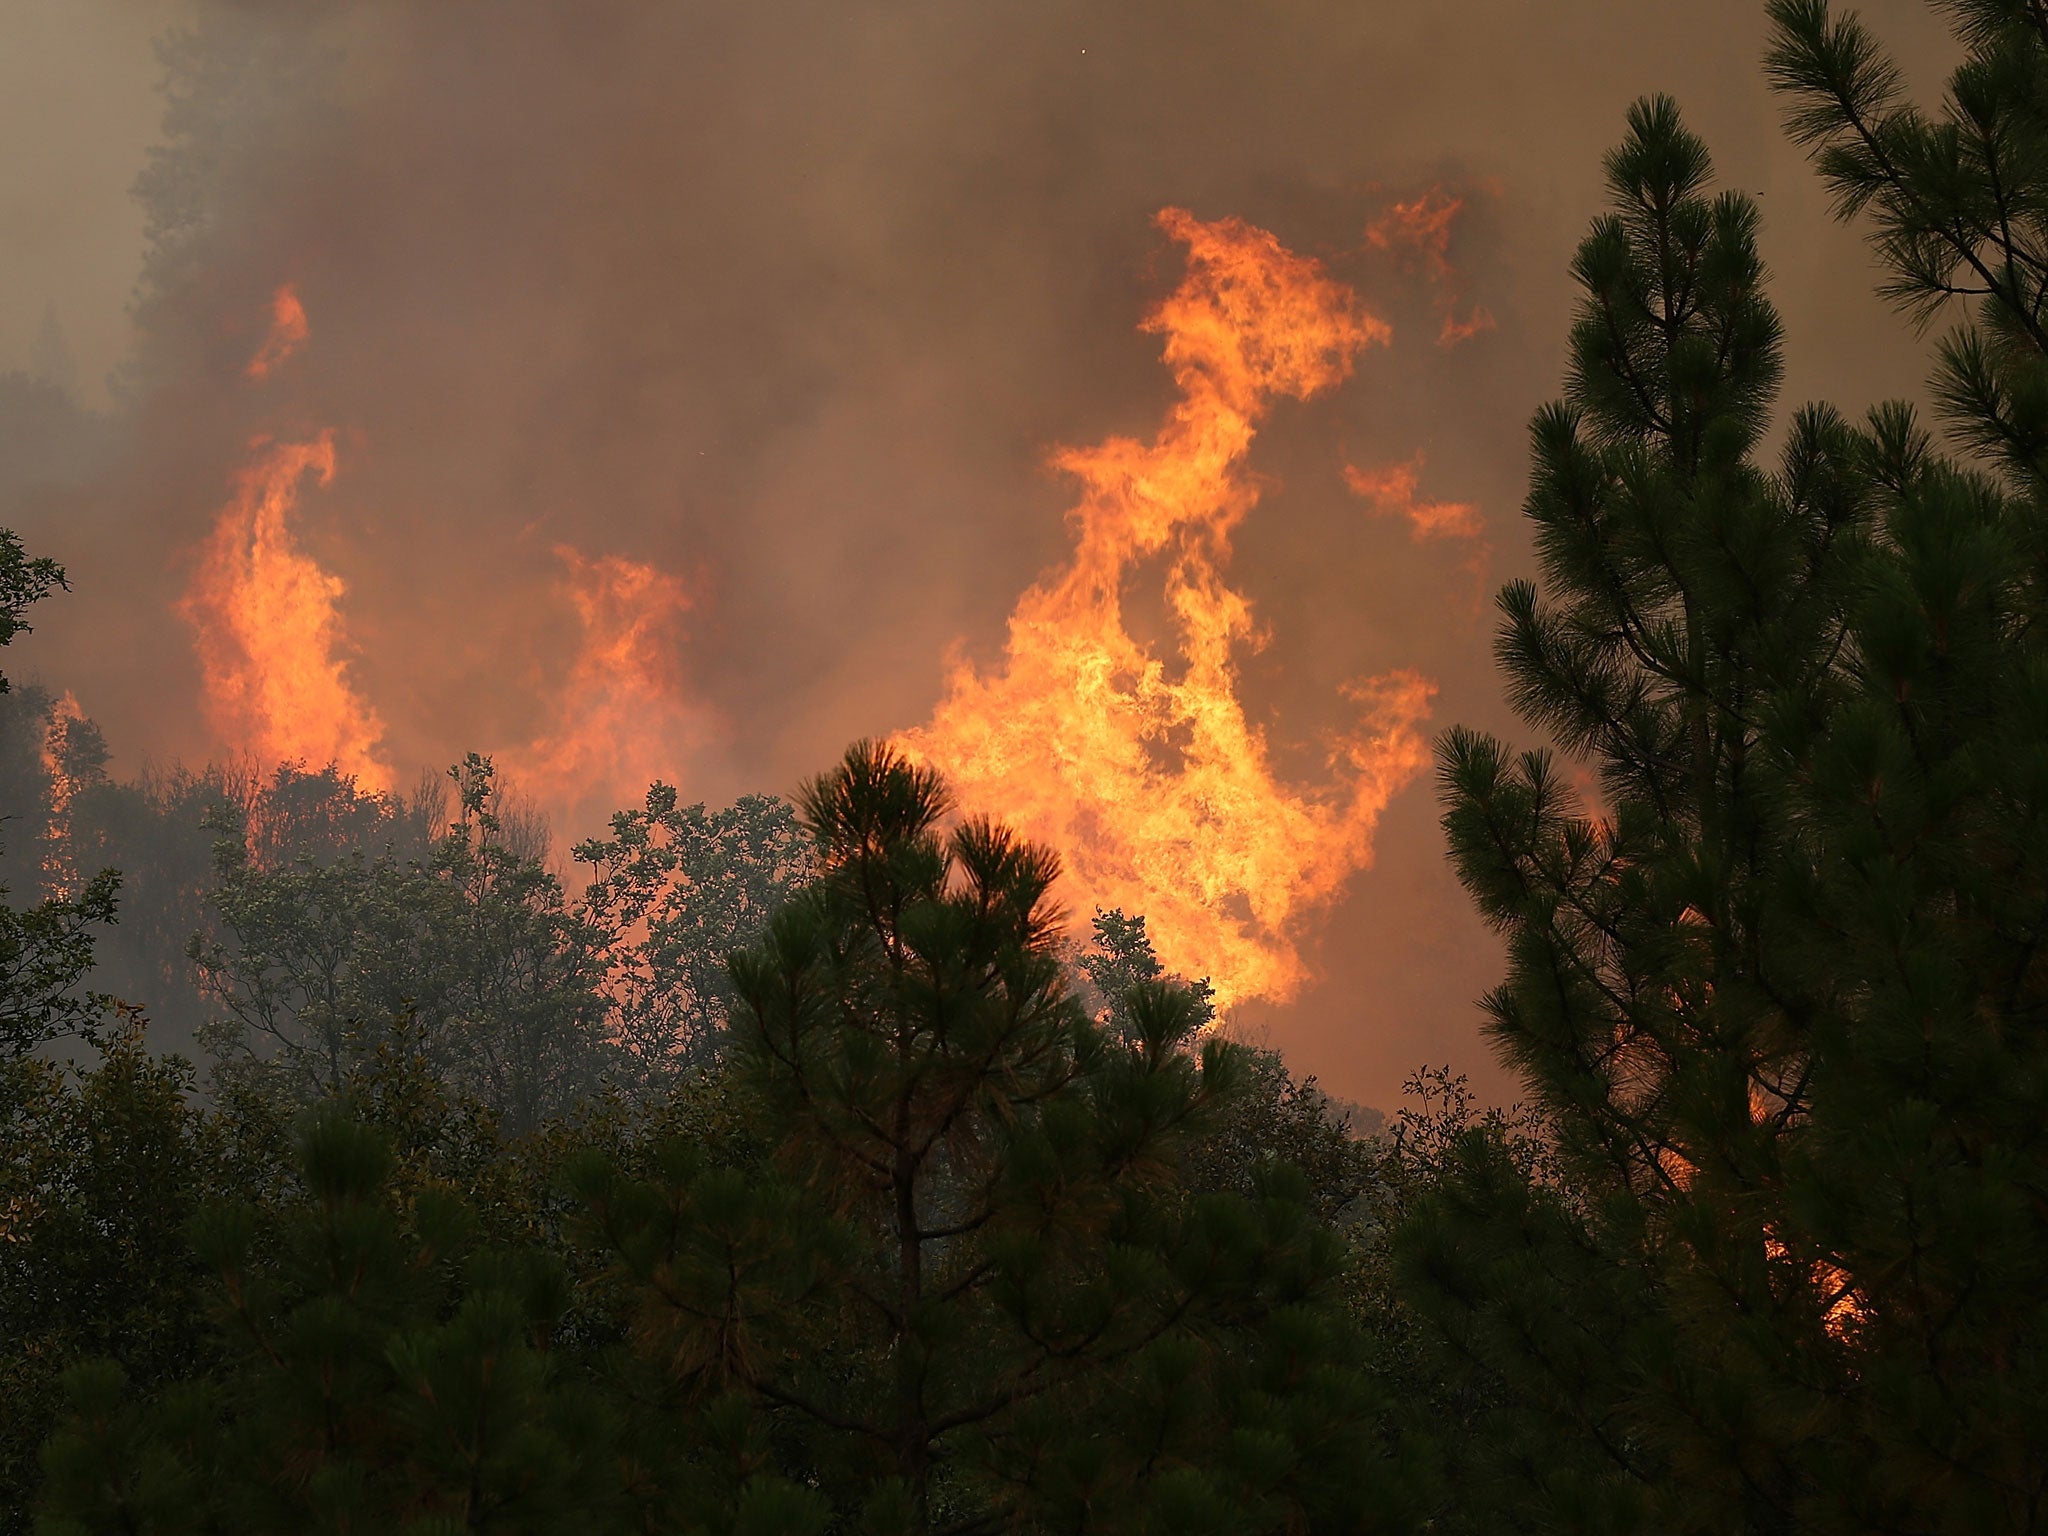 The Rim Fire consumes trees on August 23, 2013 near Groveland, California